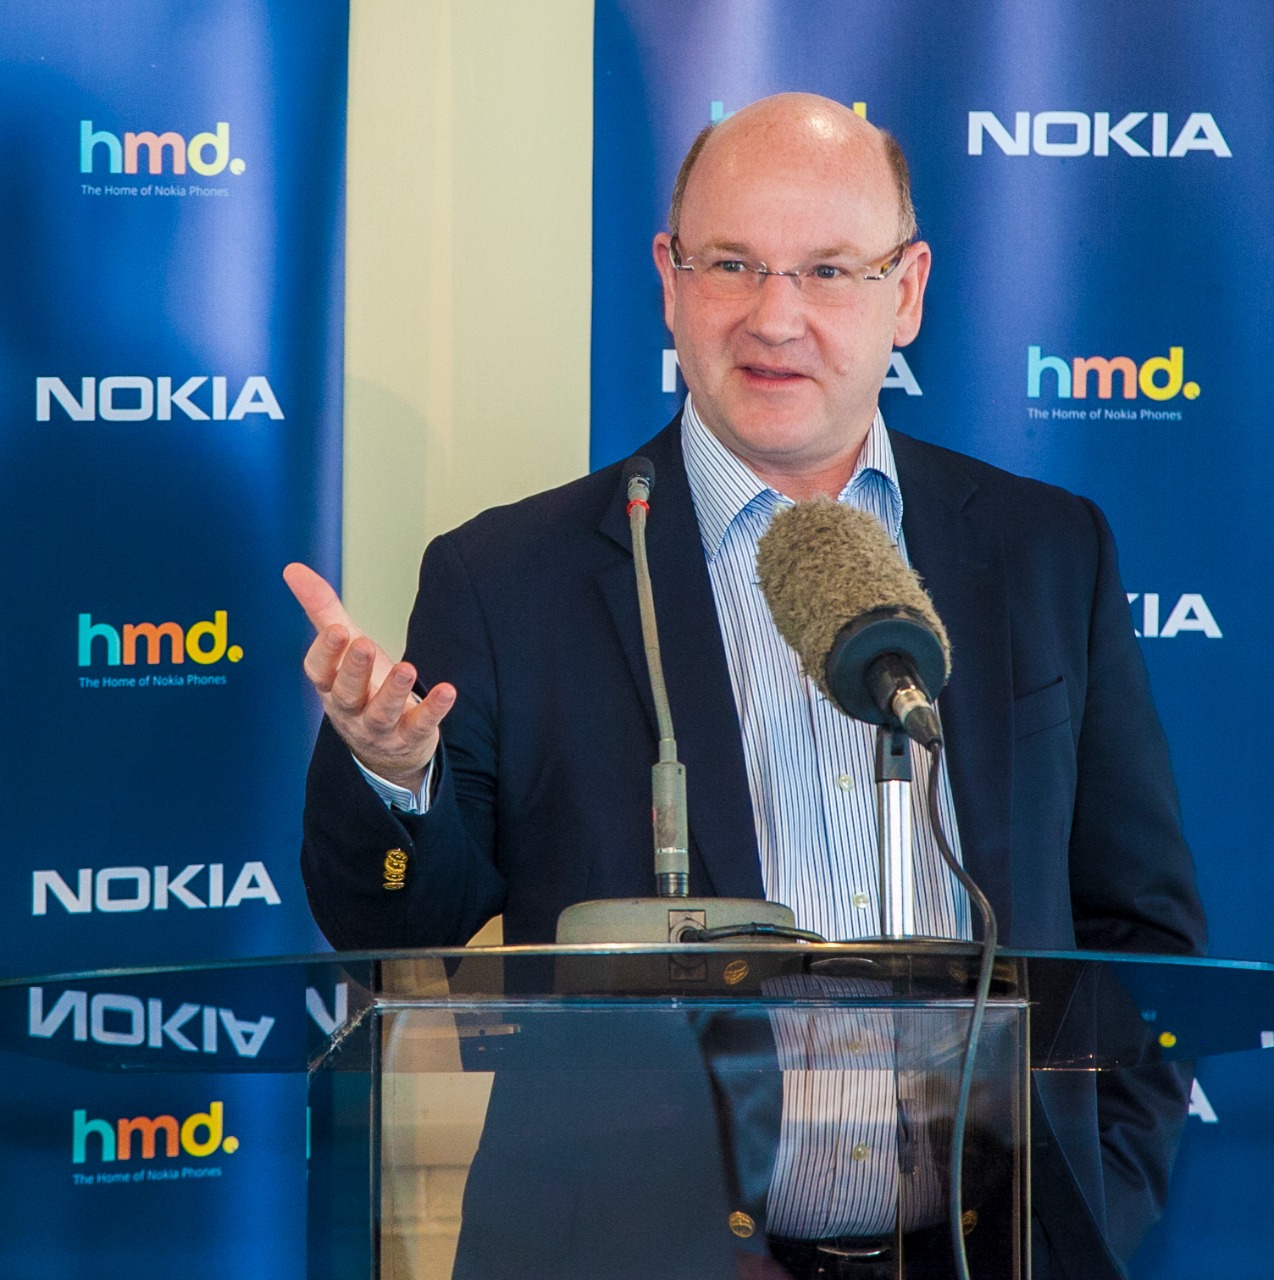 Florian Seiche, the new HMD CEO